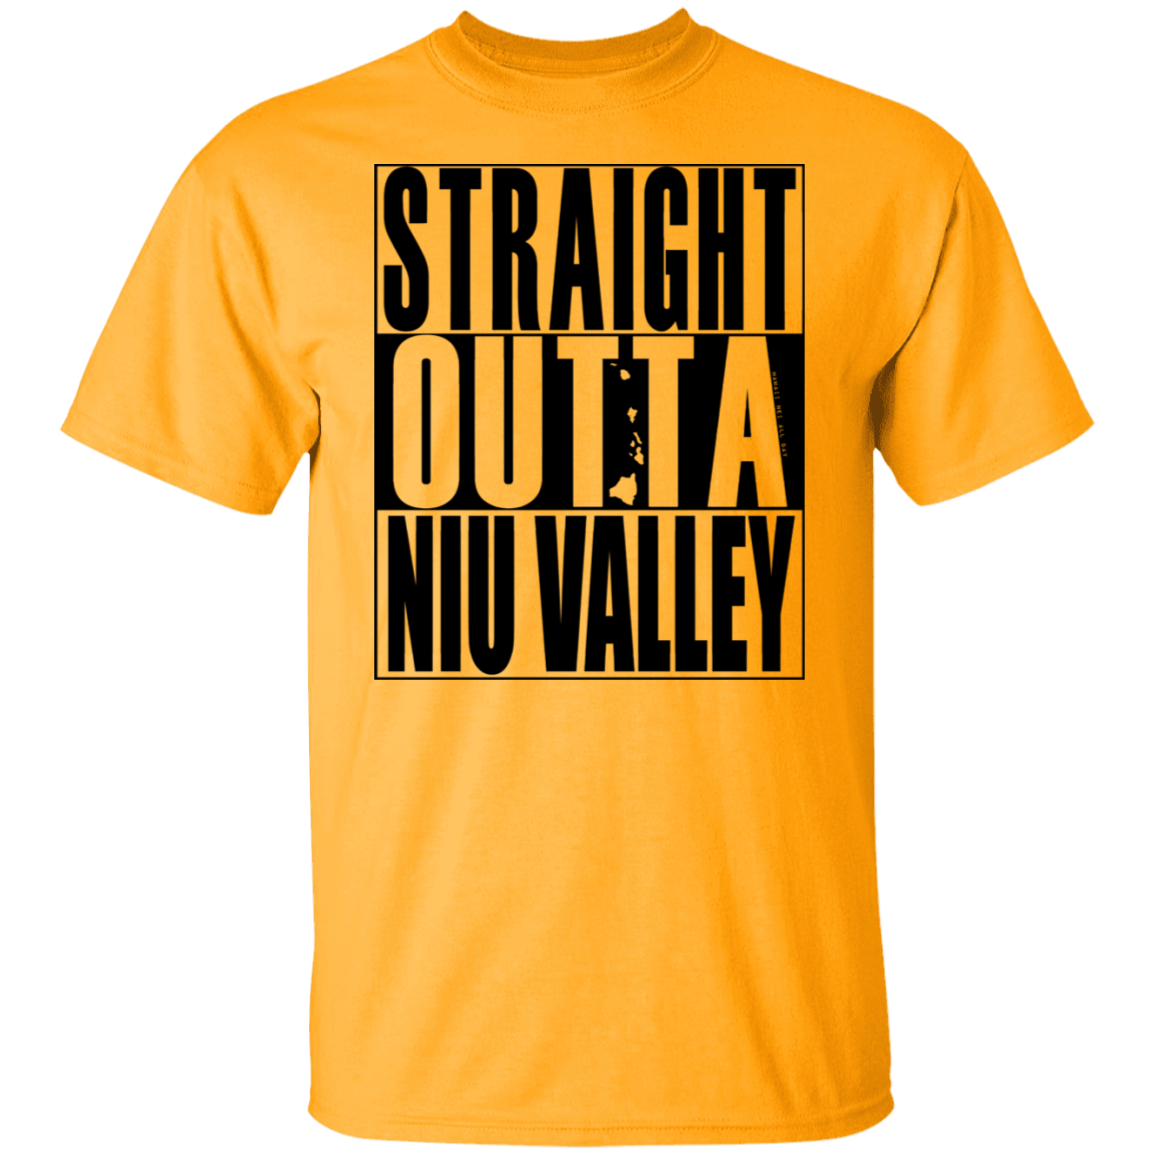 Straight Outta Niu Valley (black ink) T-Shirt